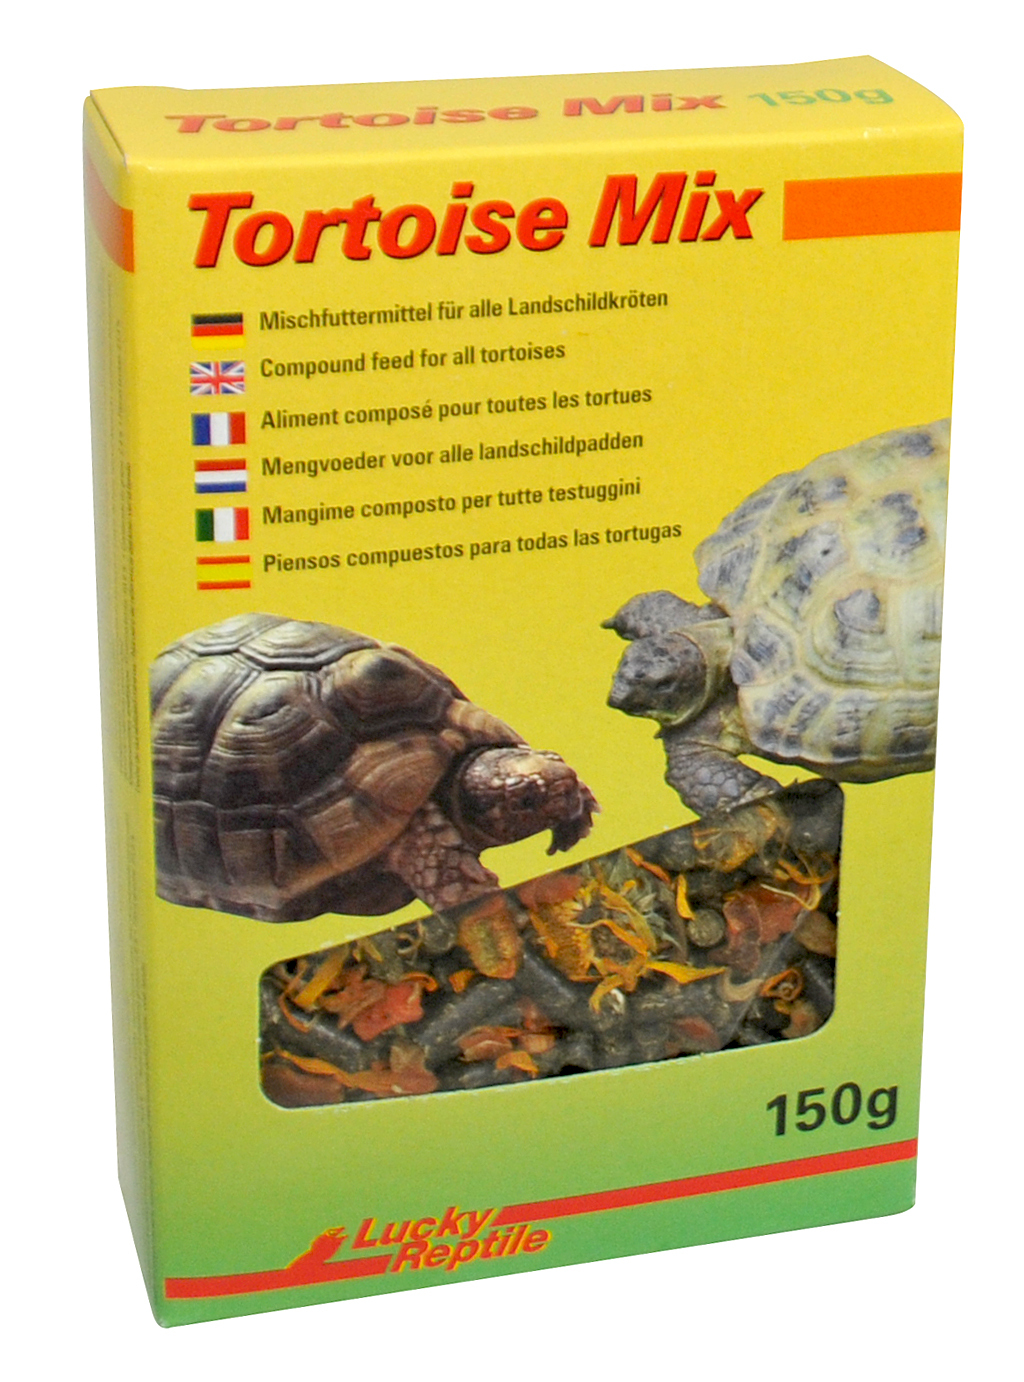 Import-Export Peter Hoch GmbH Tortoise Mix